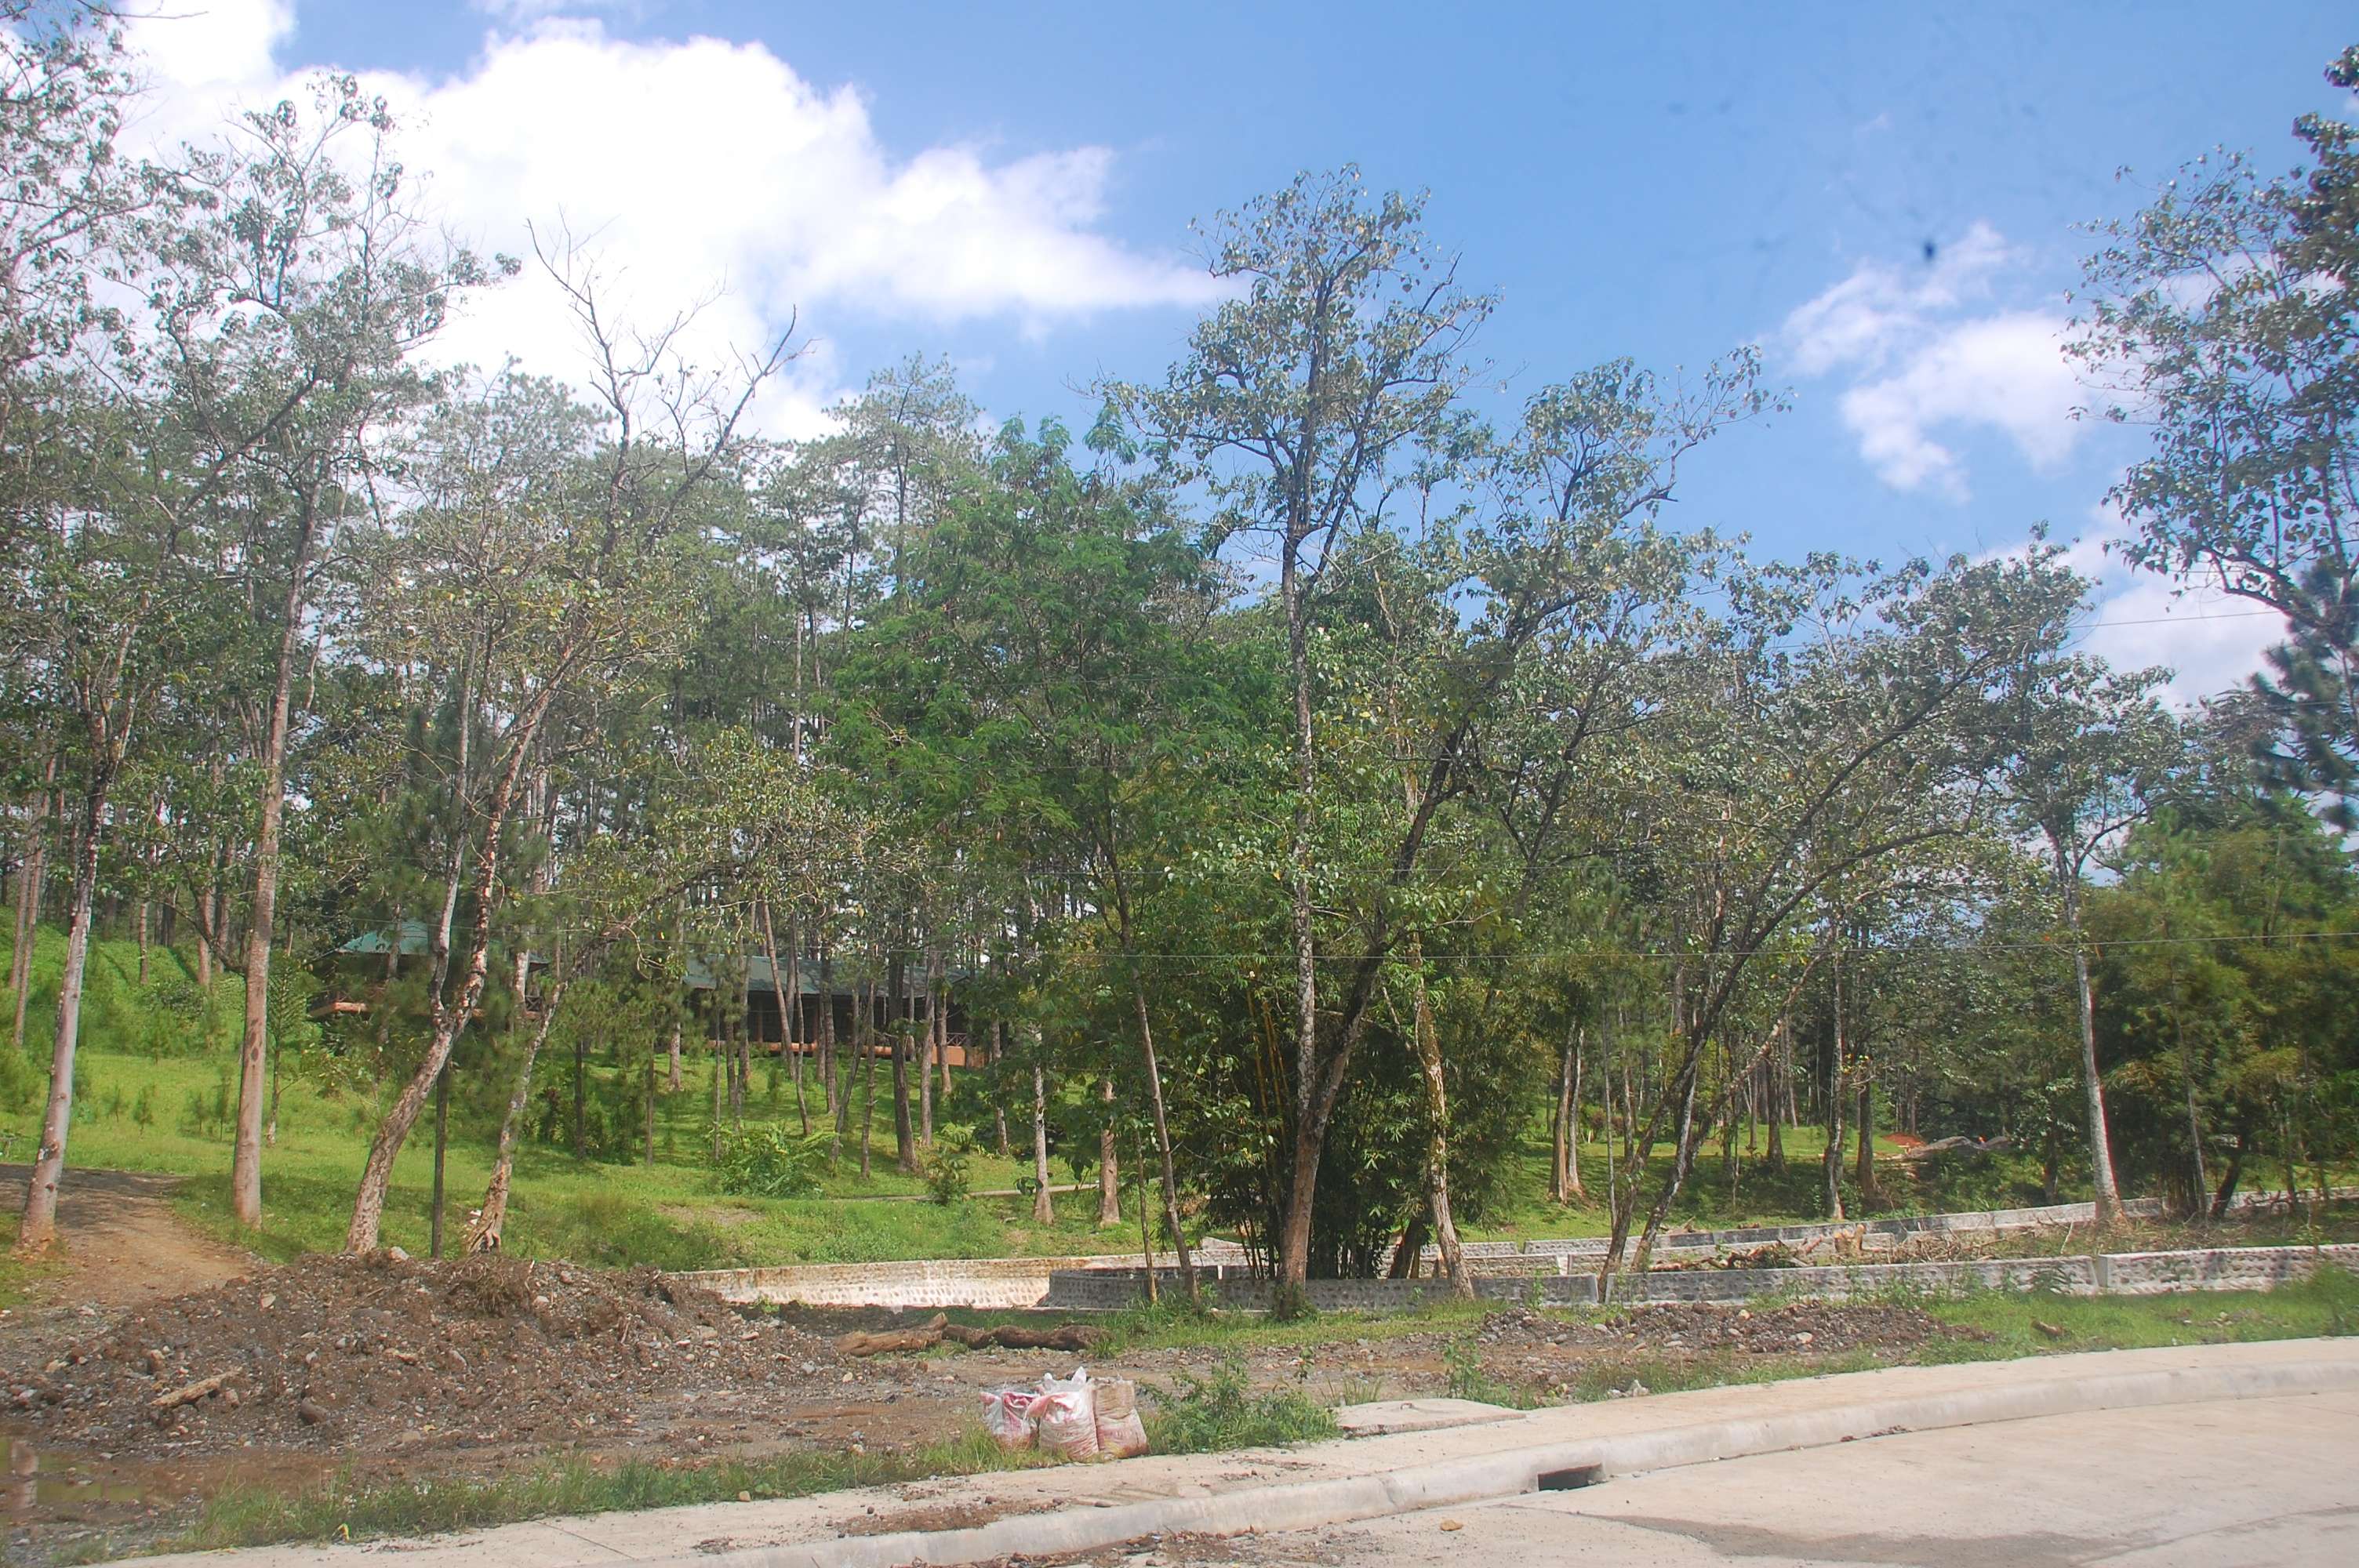 kaamulan grounds malaybalay bukidnon